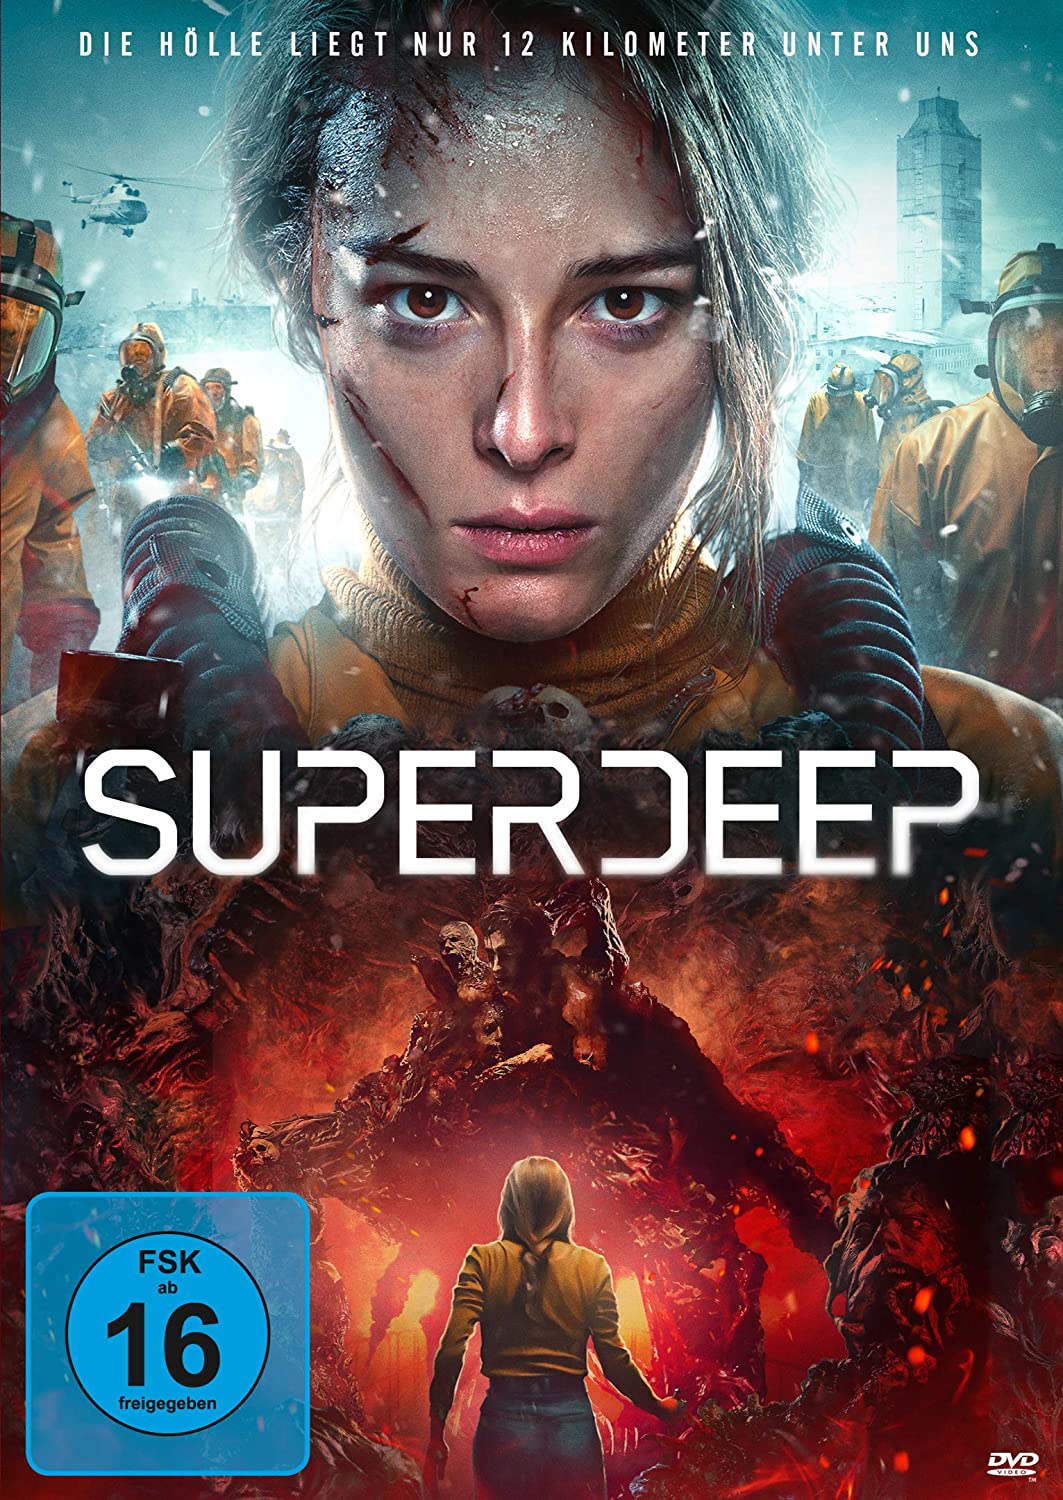 Superdeep - DVD Cover